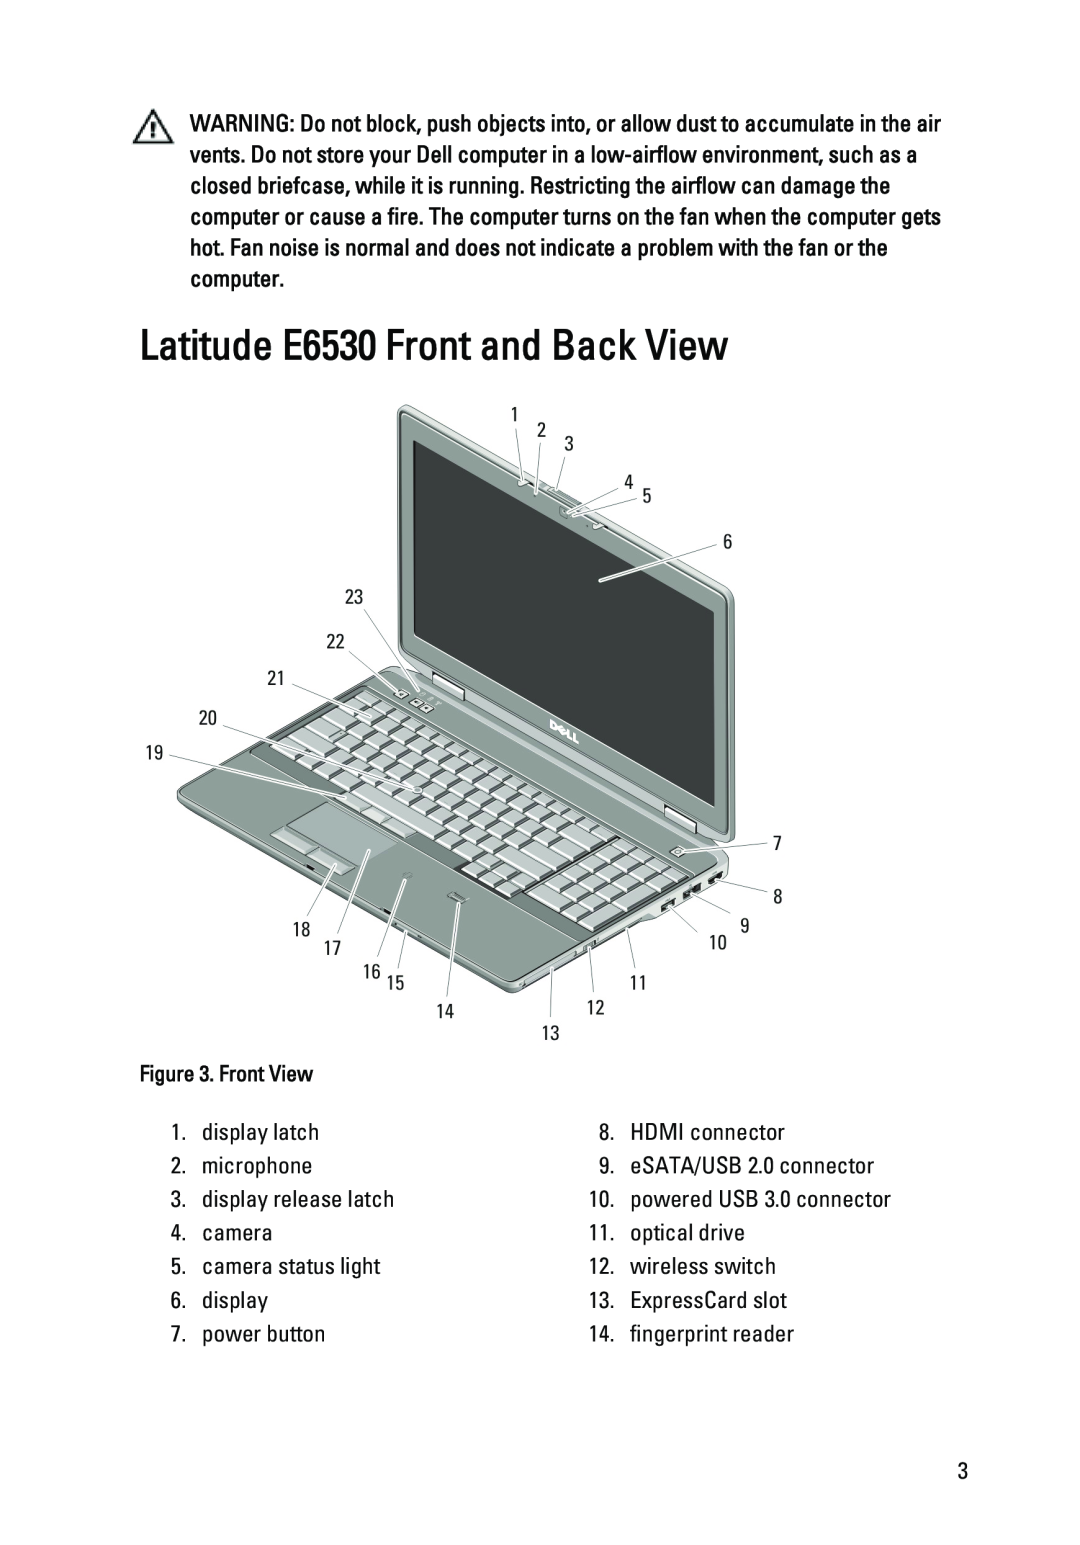 Dell E6430 ATG manual Latitude E6530 Front and Back View 